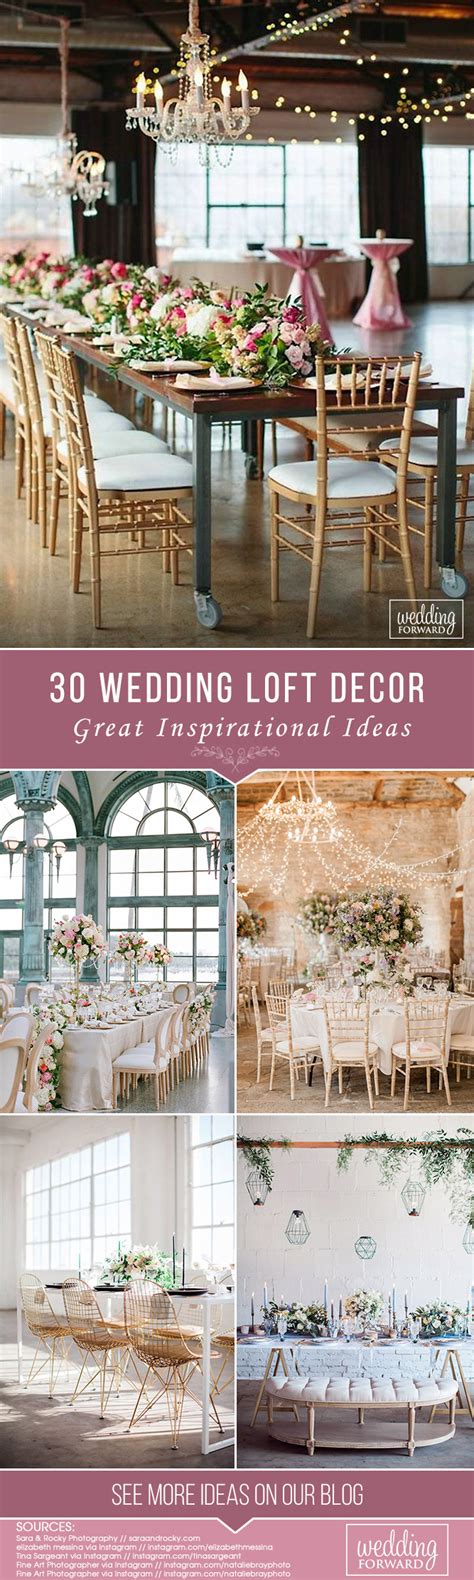 Personalizing a little nest with a cute shelfie also helps. 30 Lovely Wedding Loft Decorating Ideas | Loft decor ...